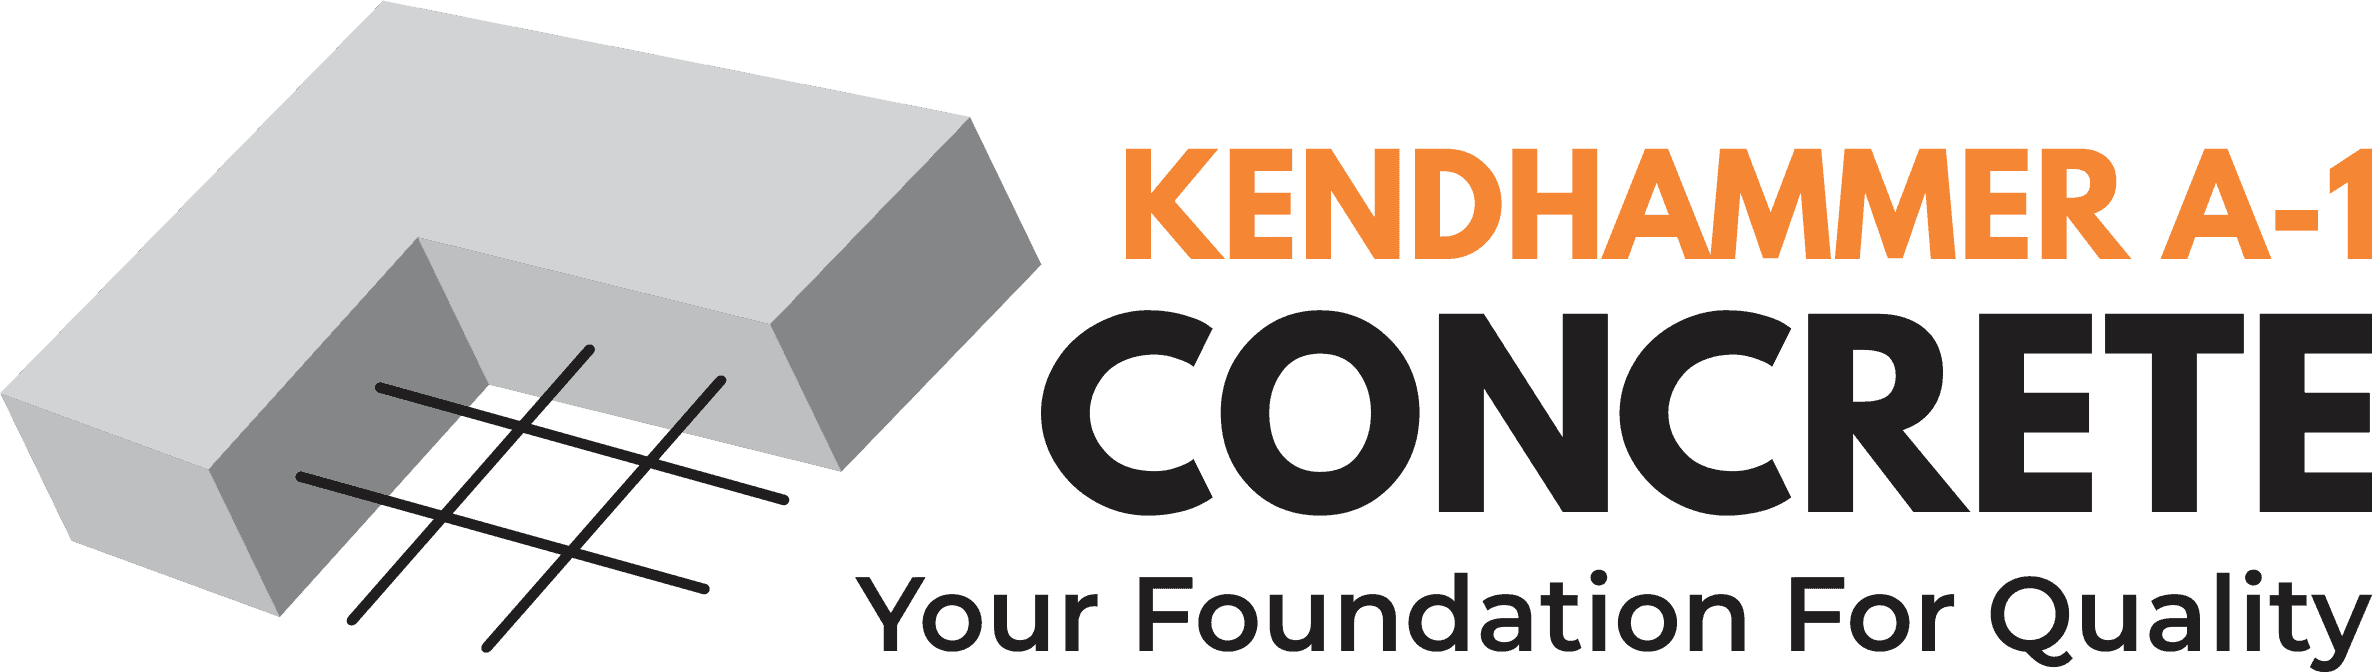 Kendhammer A-1 Concrete